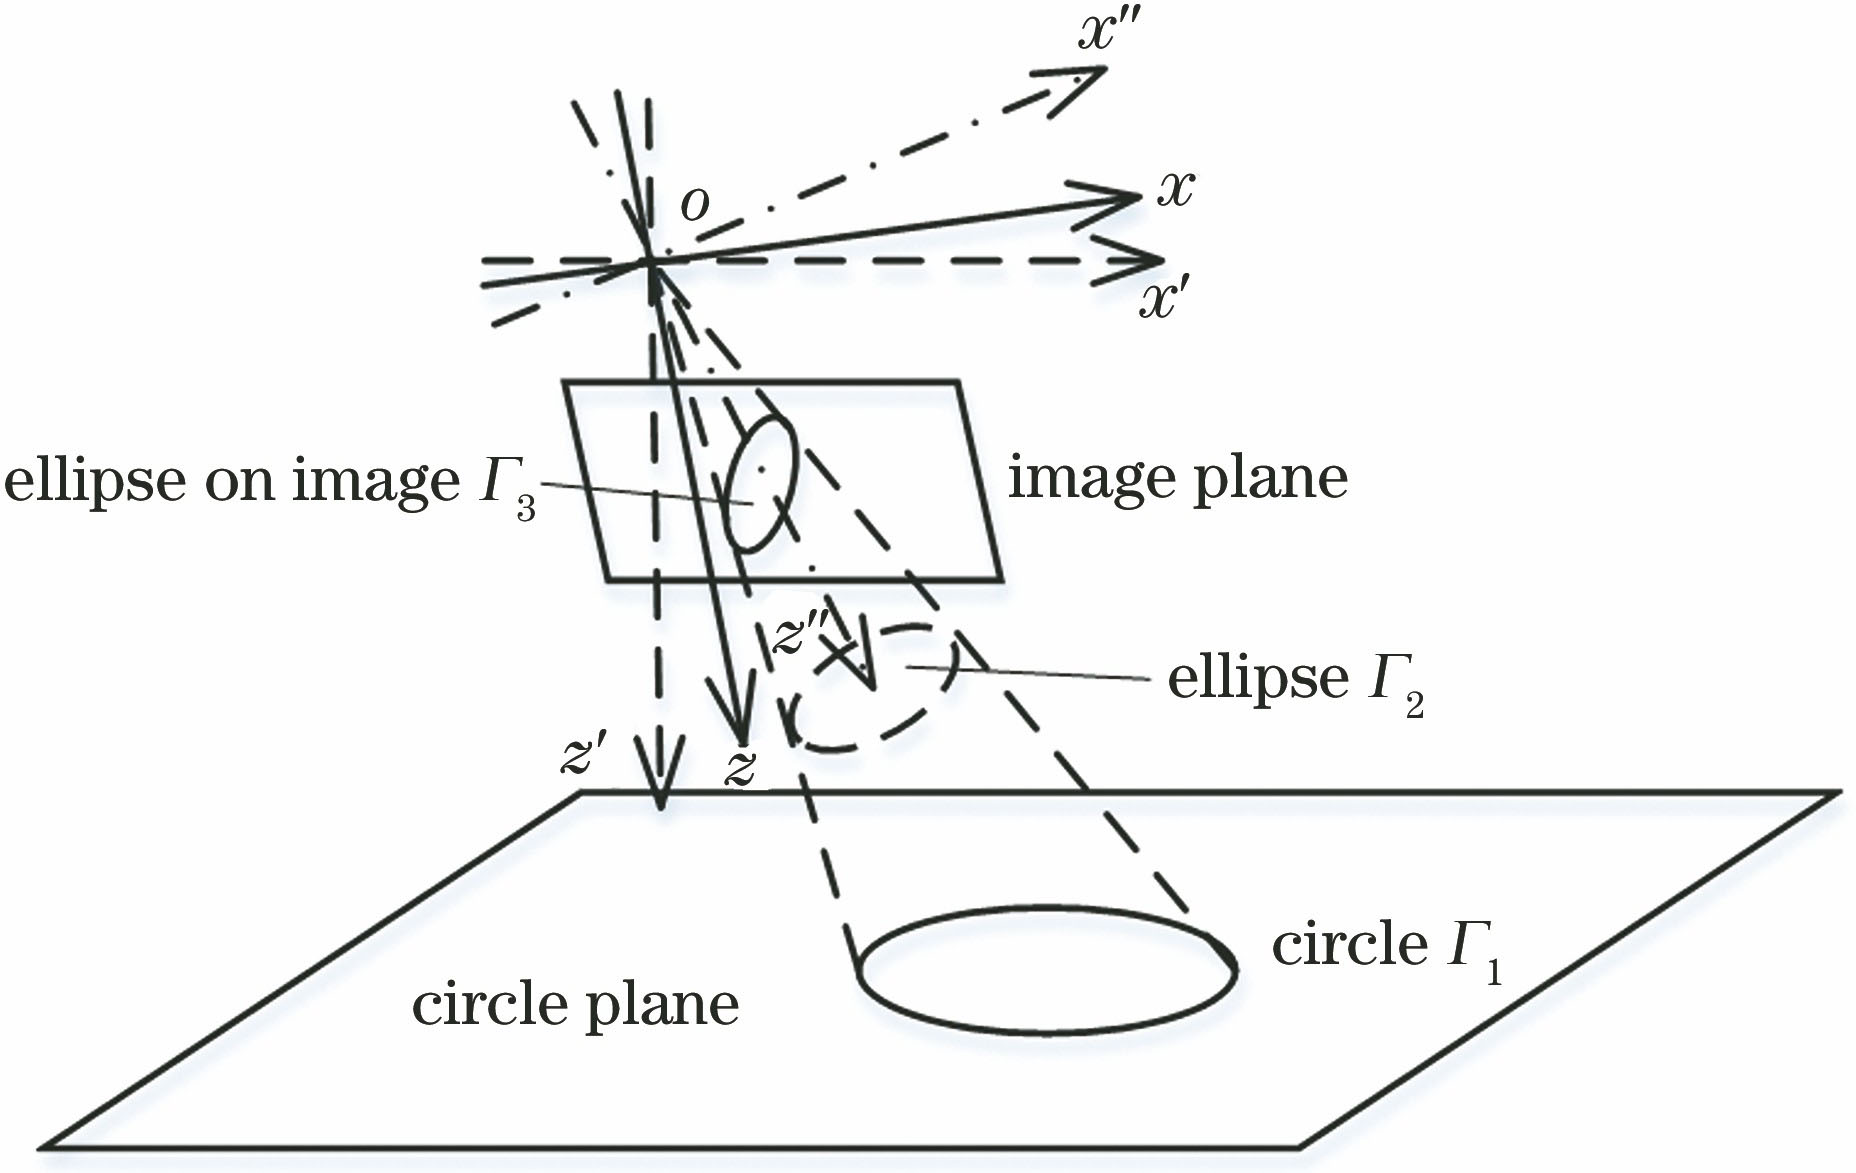 Circular hole imaging coordinate system transformation